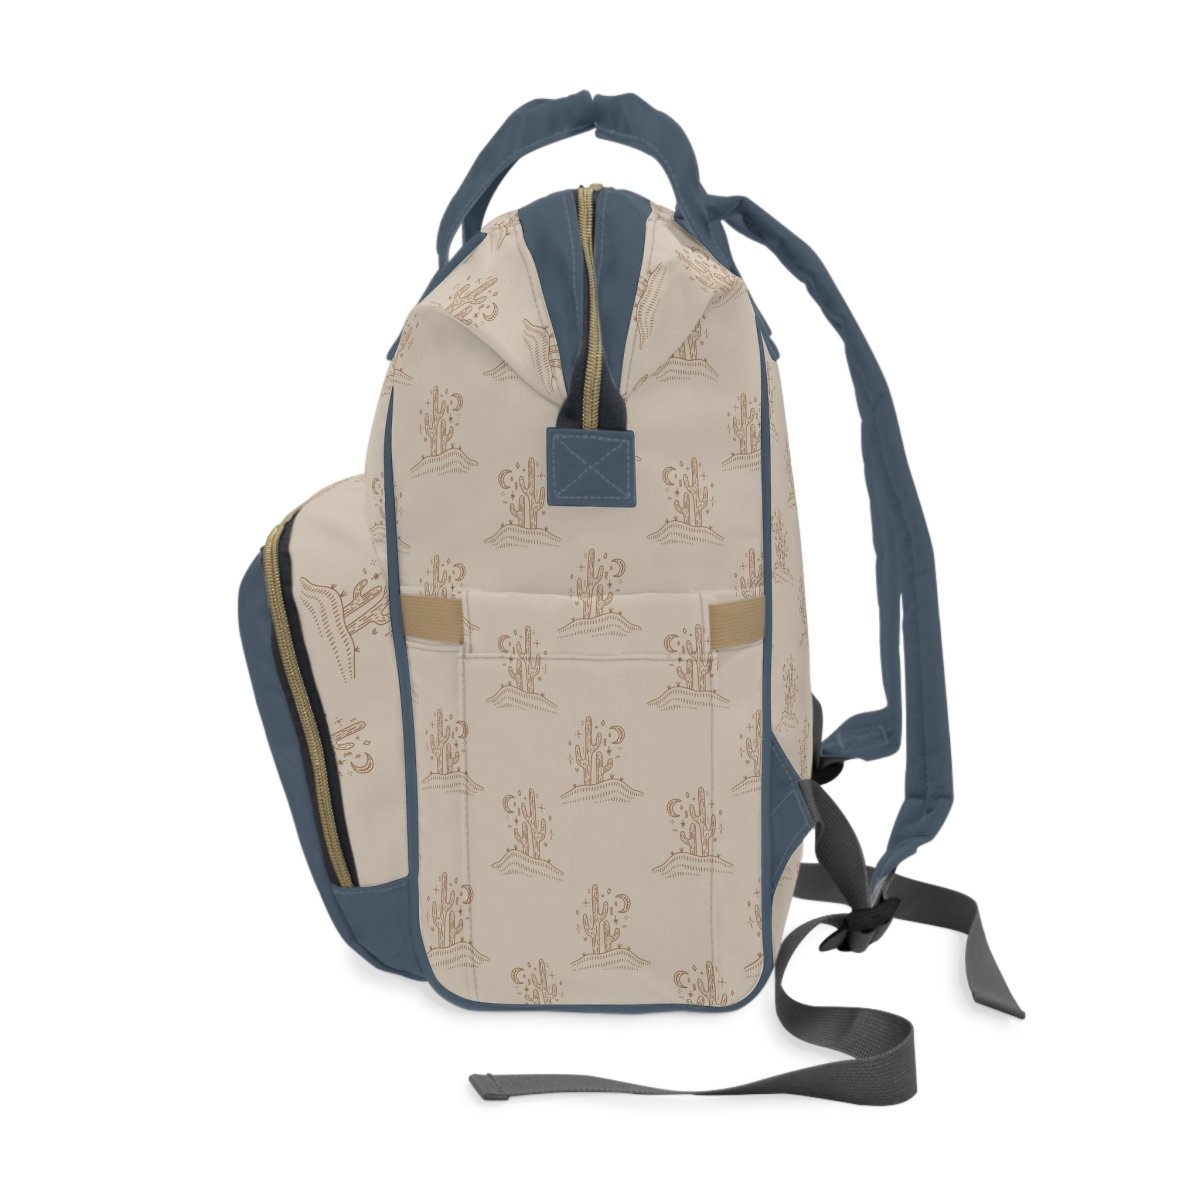 Roam Free Personalized Backpack Diaper Bag - gender_boy, Roam Free, text